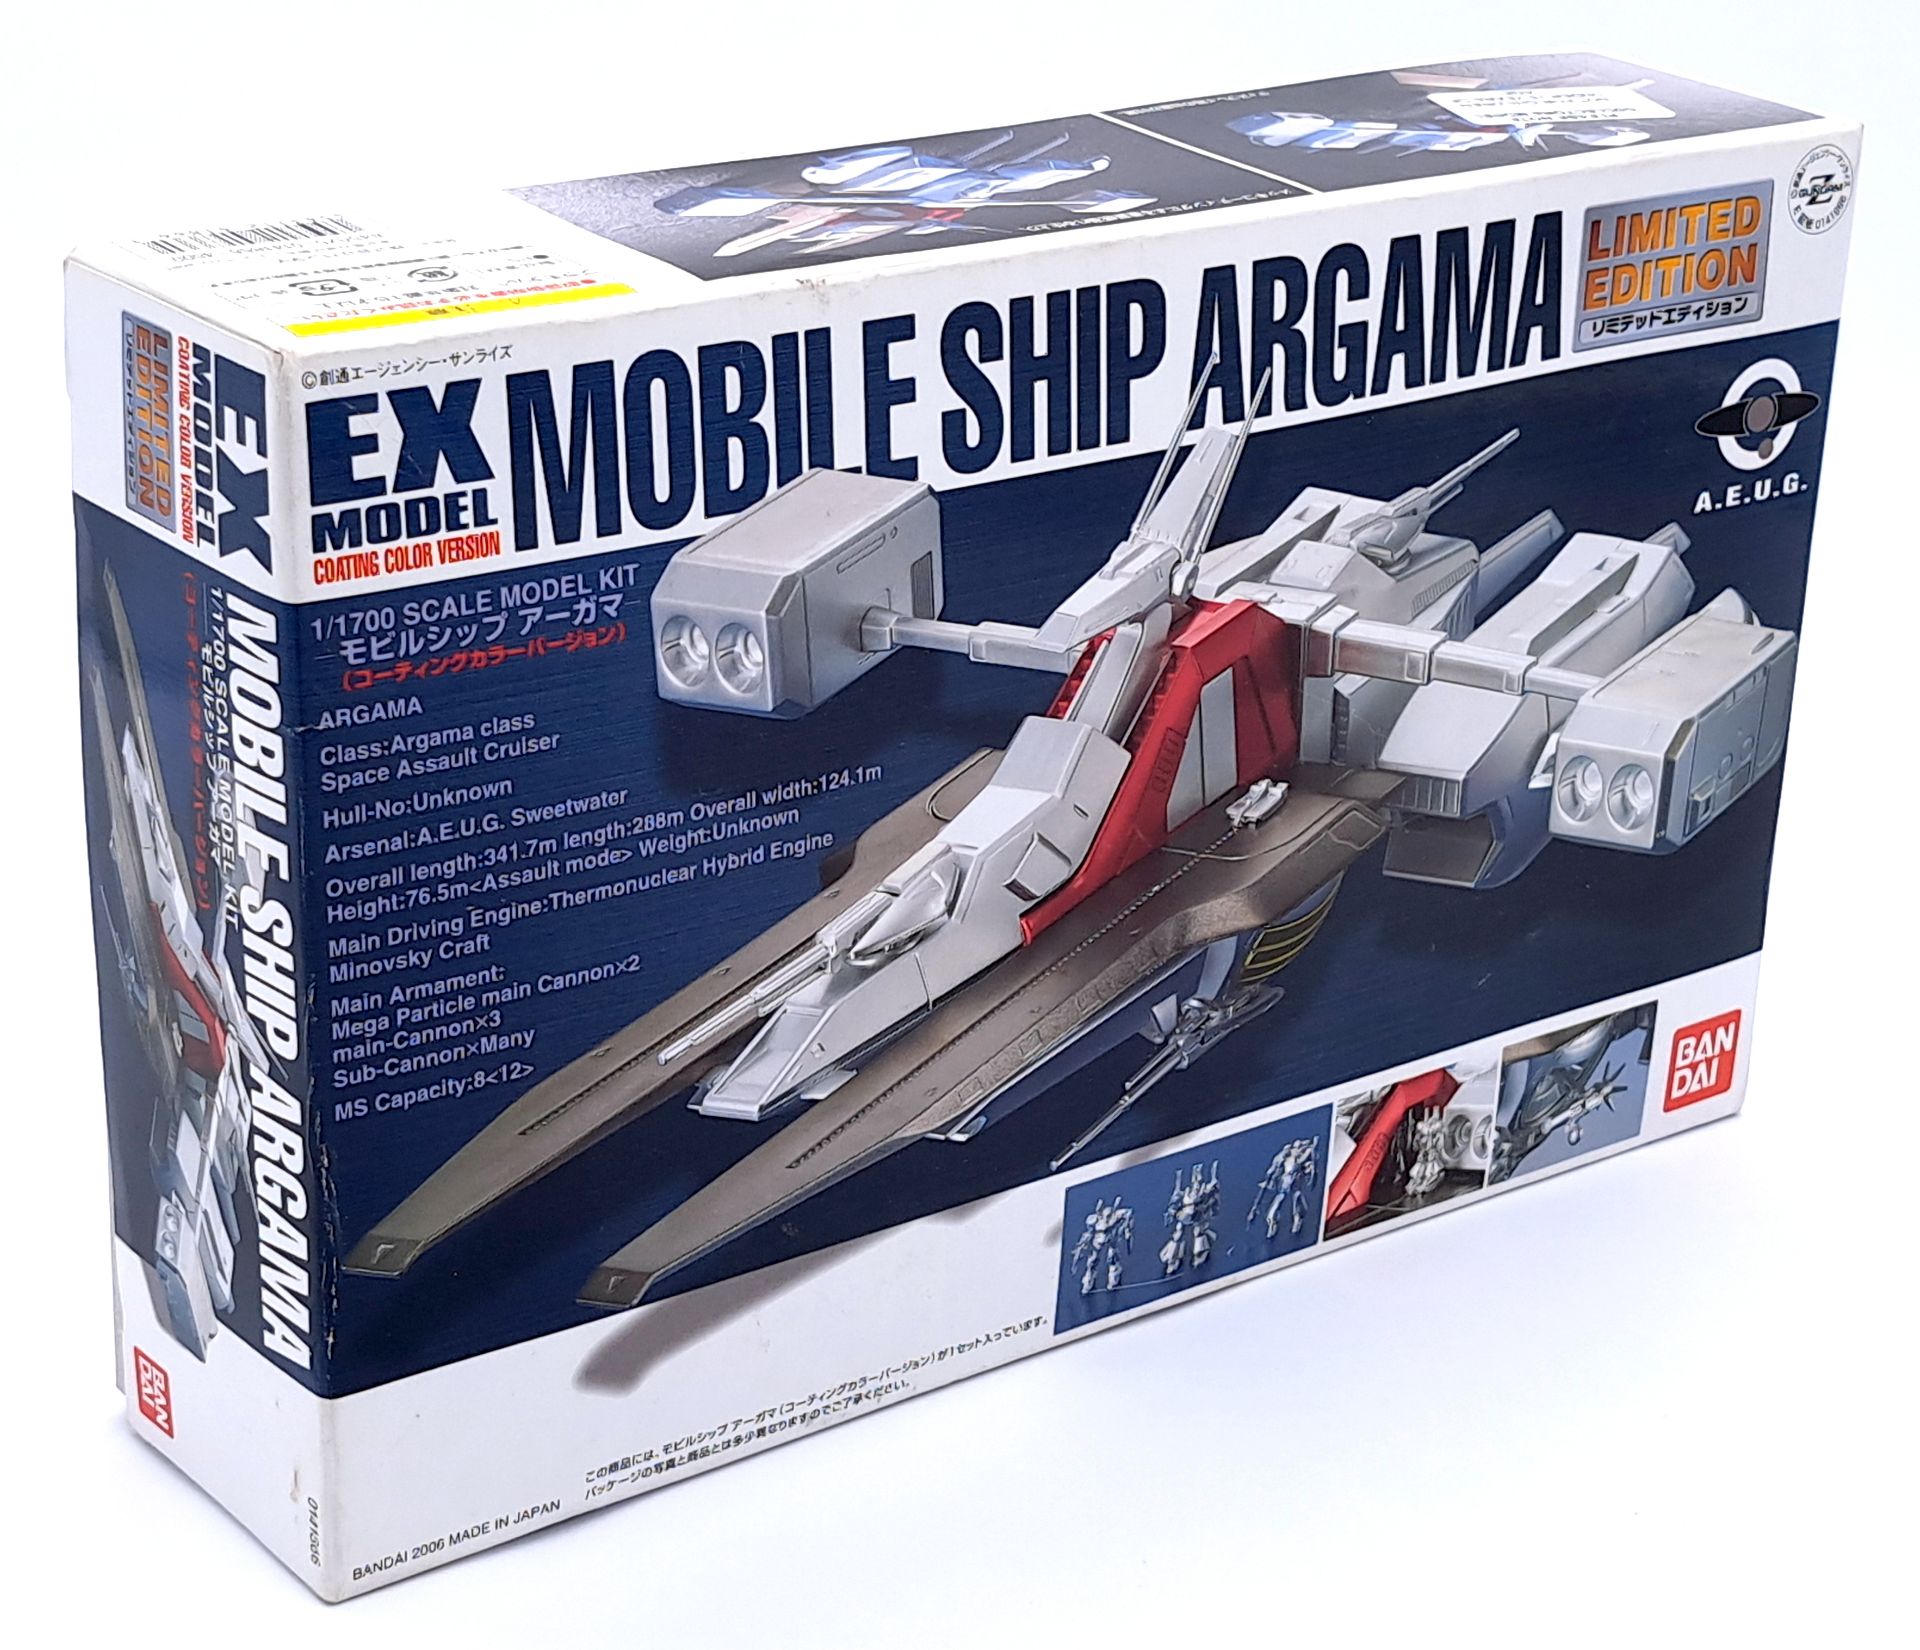 Bandai Ex Model Mobile Ship Argama 1/1700 scale limited edition plastic model kit